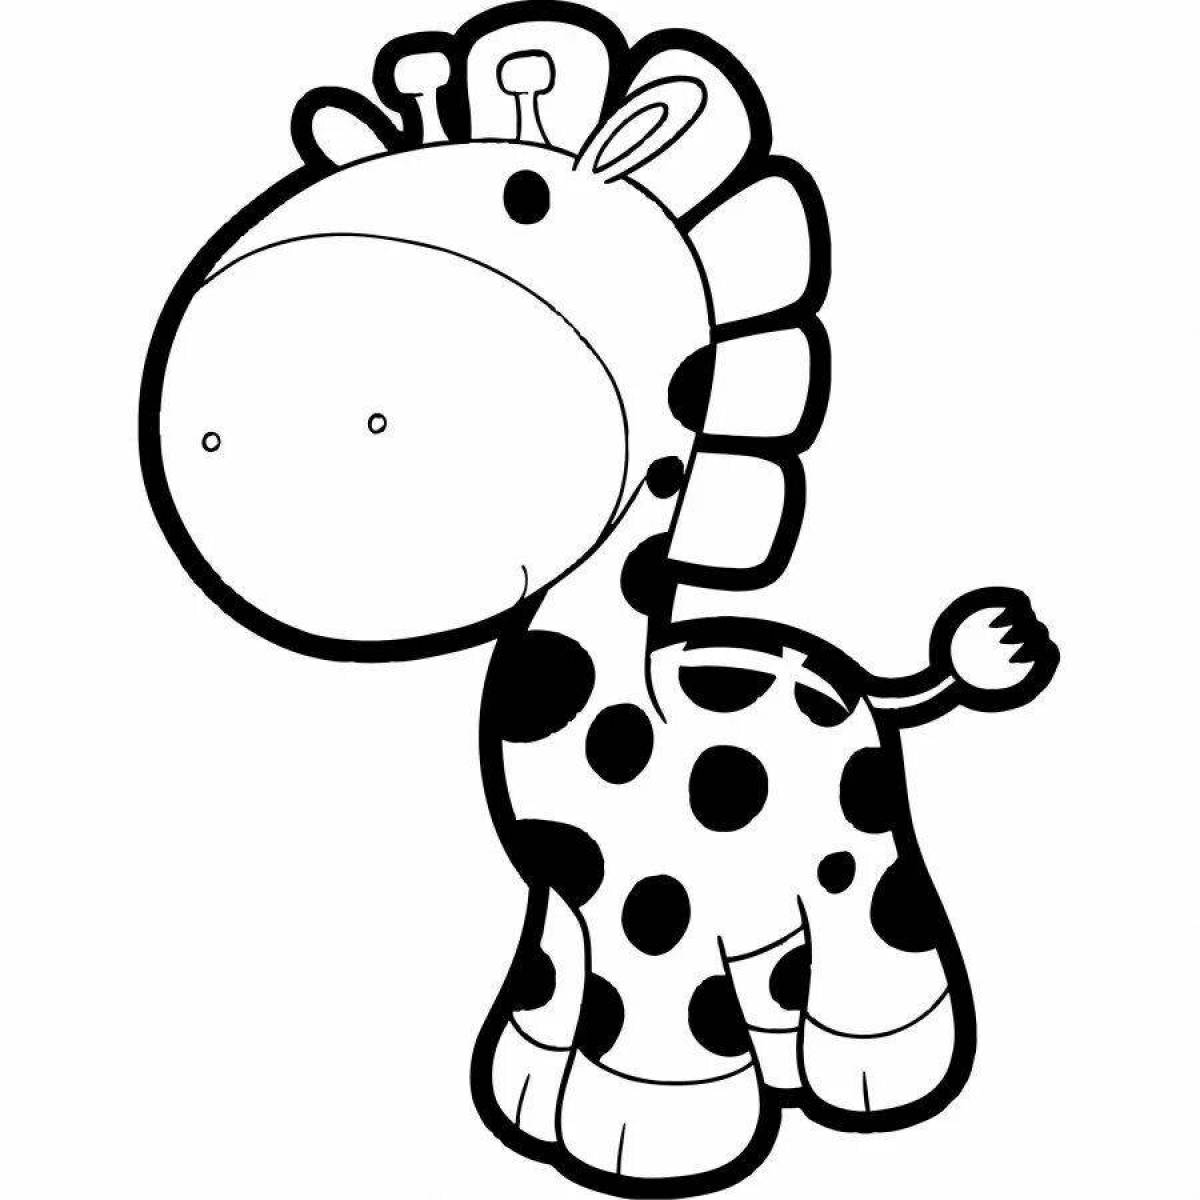 Magic giraffe drawing for kids